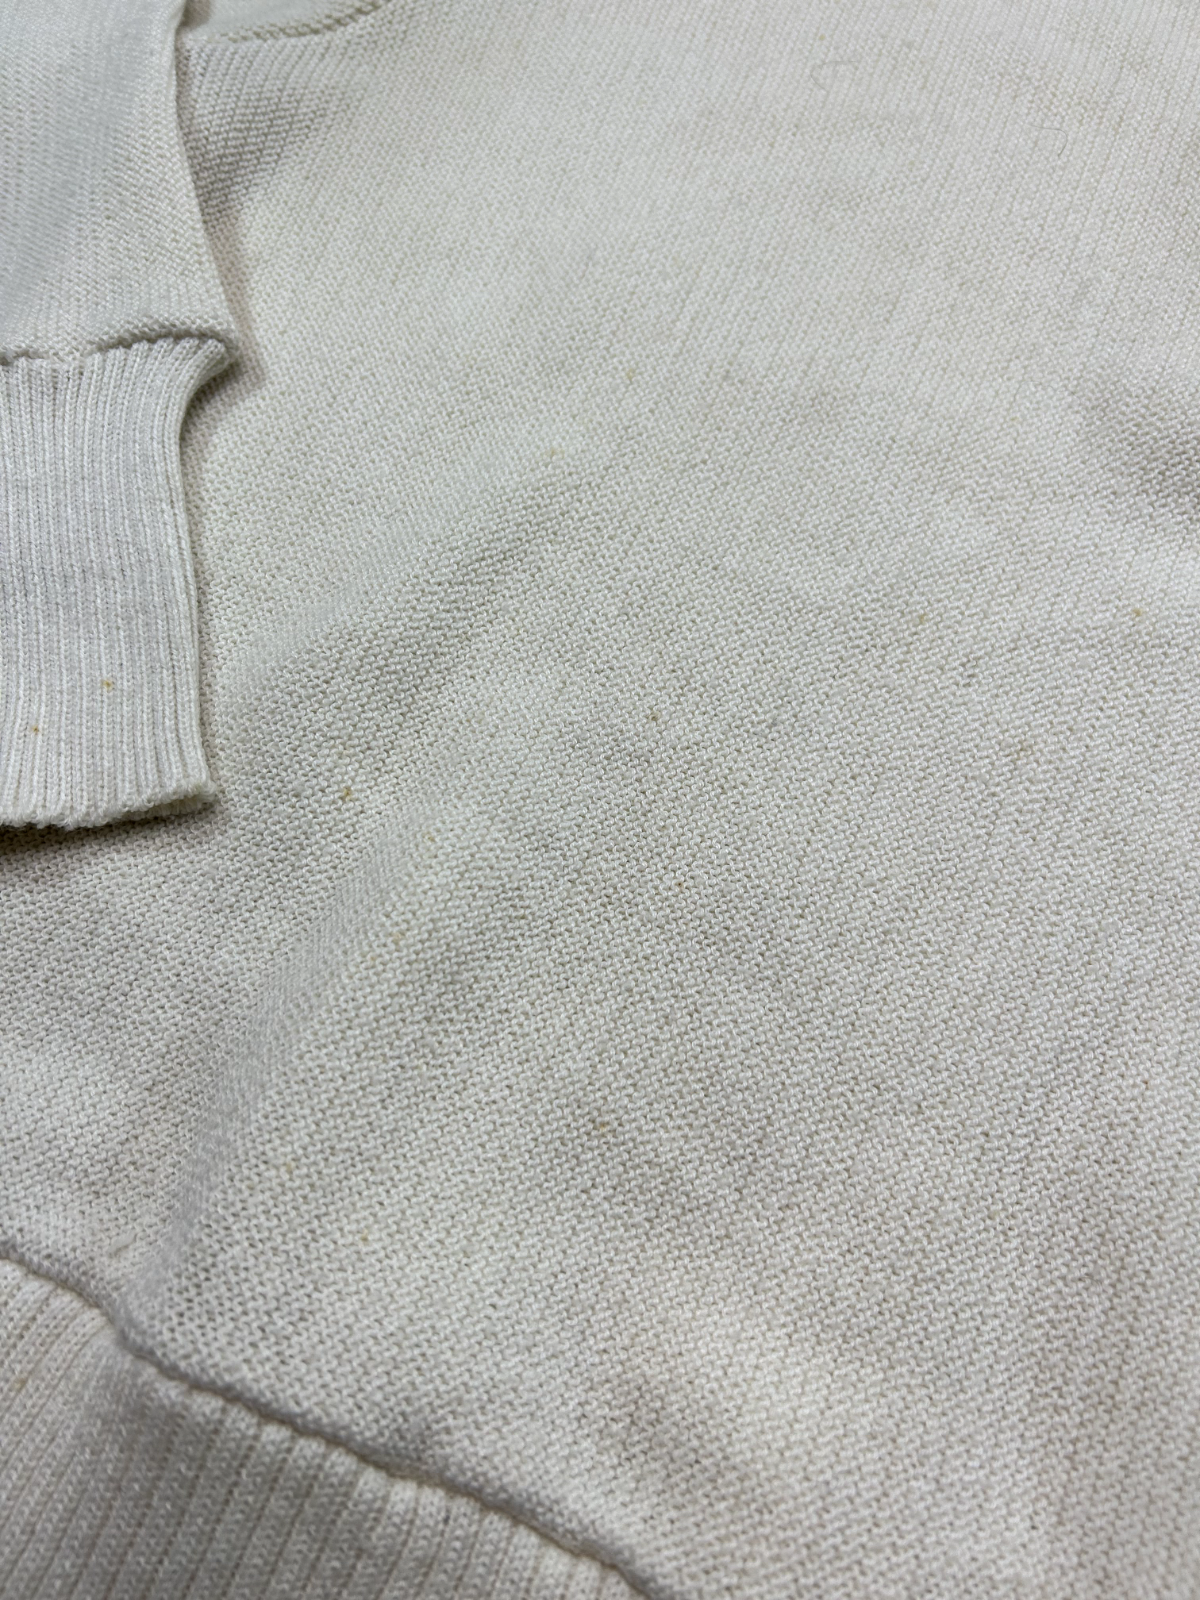 Vintage CPGA Exclusive 100% Wool 1/2 Collard Knit Sweater Size Medium Beige